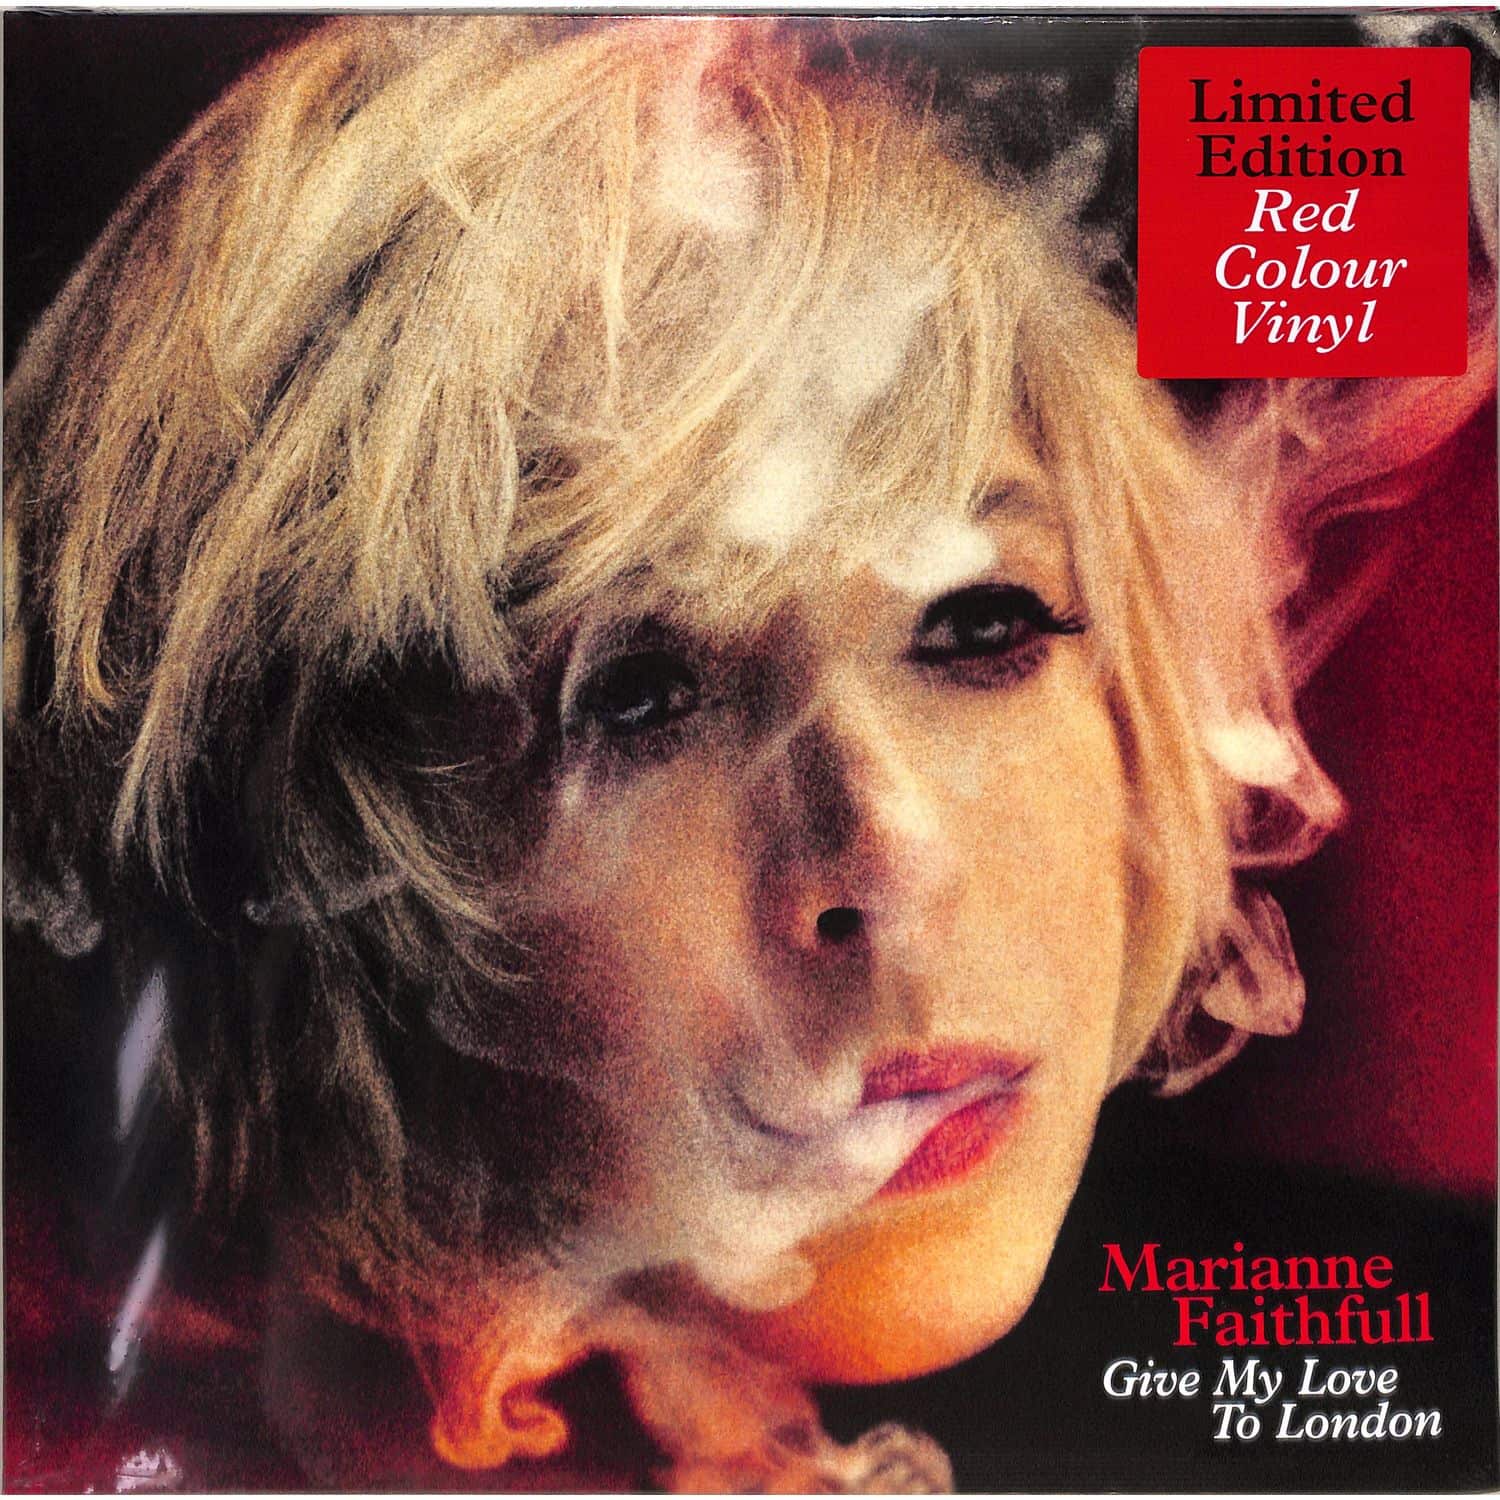  Marianne Faithfull - GIVE MY LOVE TO LONDON 